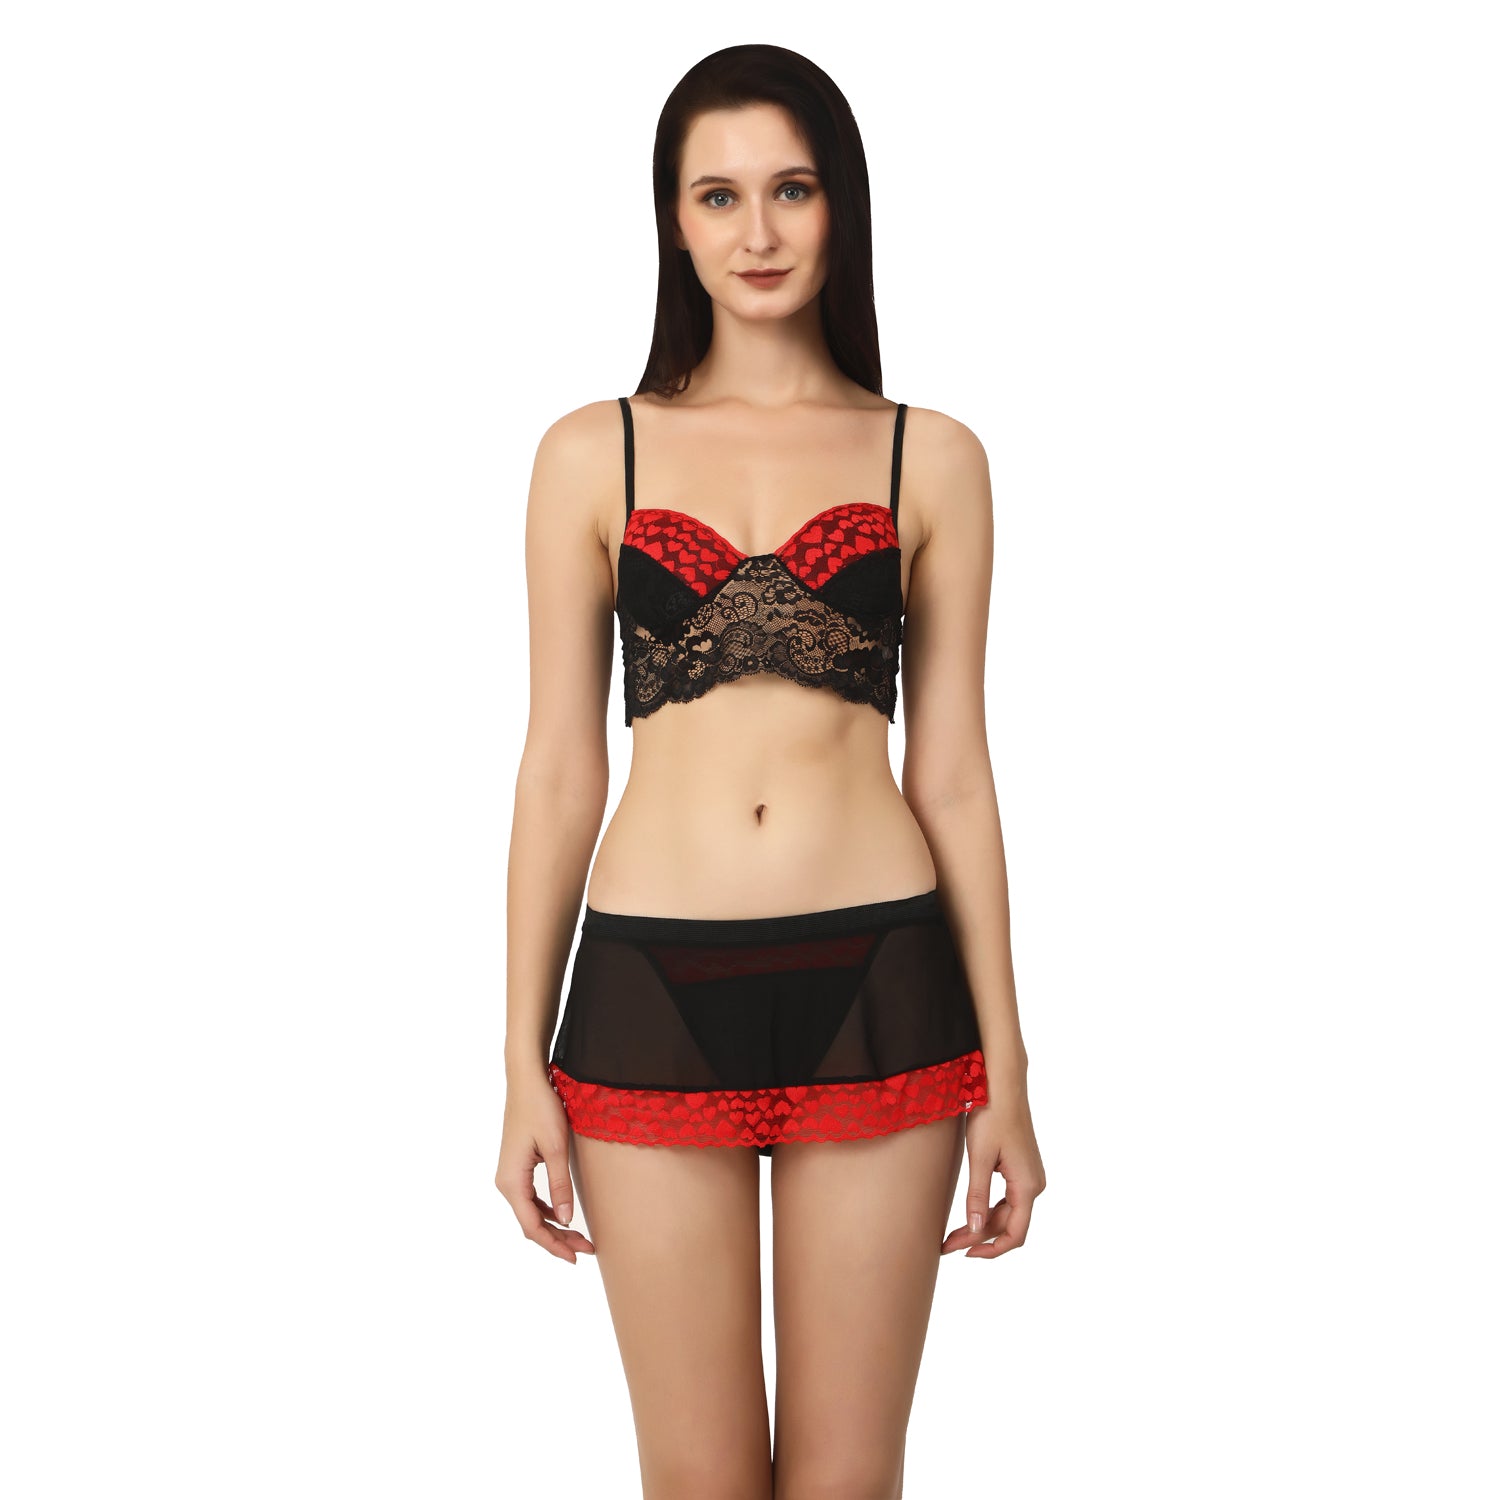 Elecurve Lingerie Set 3 Pieces |Bra, Mini Skirt with G-String |Lingerie Set for Women |Black & Red